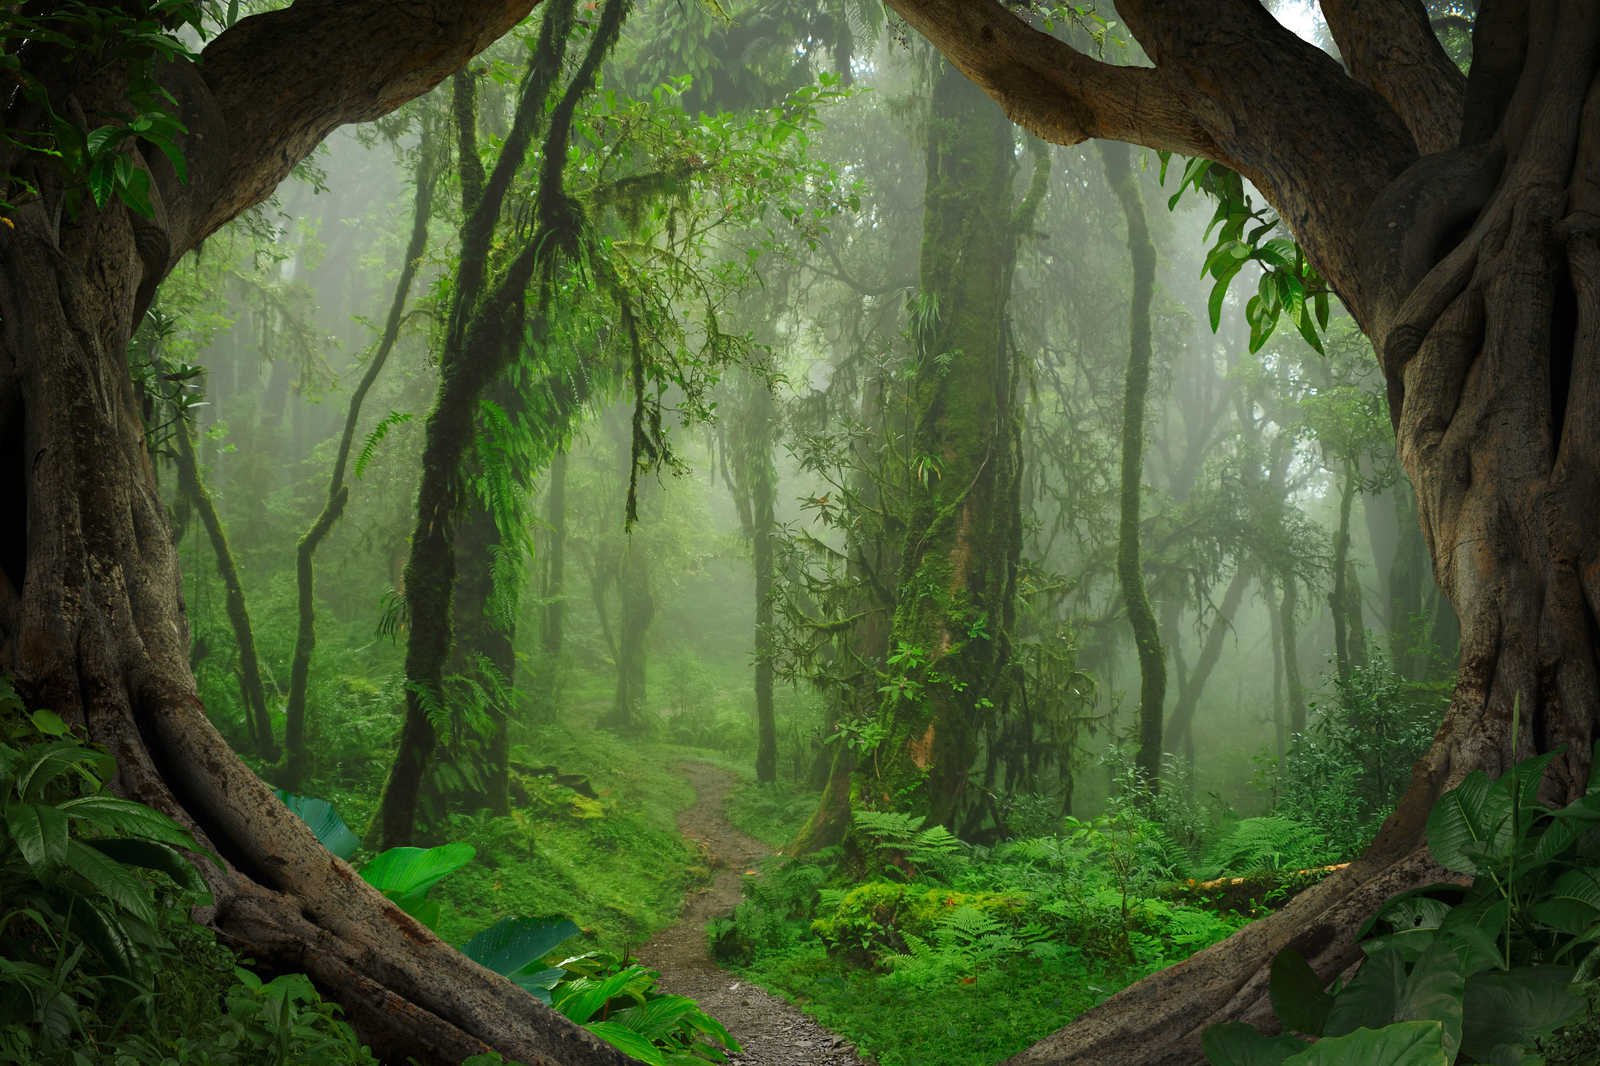             Magic Tropical Forest Canvas - 0.90 m x 0.60 m
        